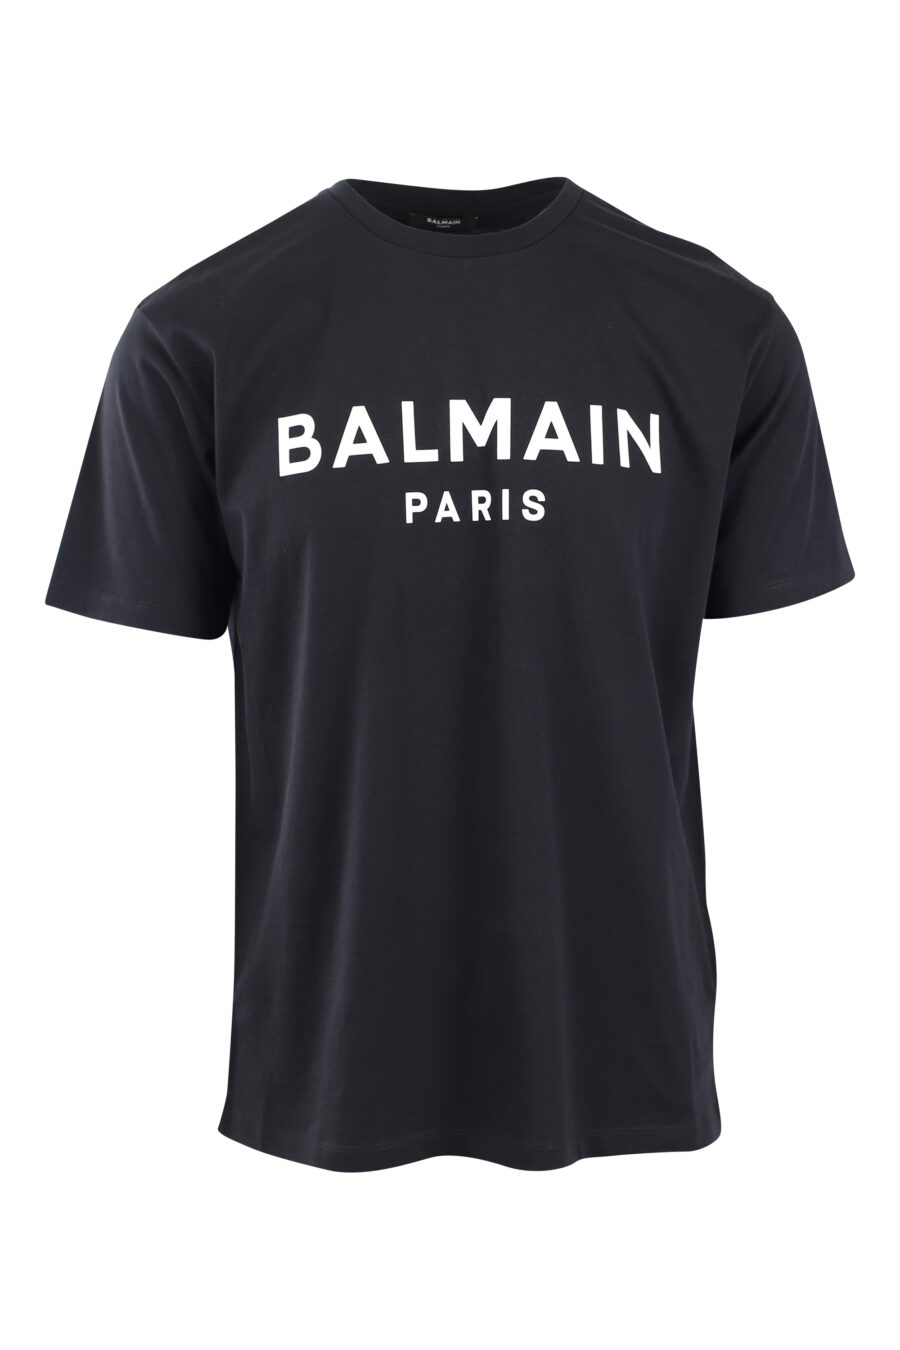 Schwarzes T-Shirt mit weißem Maxilogo "paris" - IMG 2579